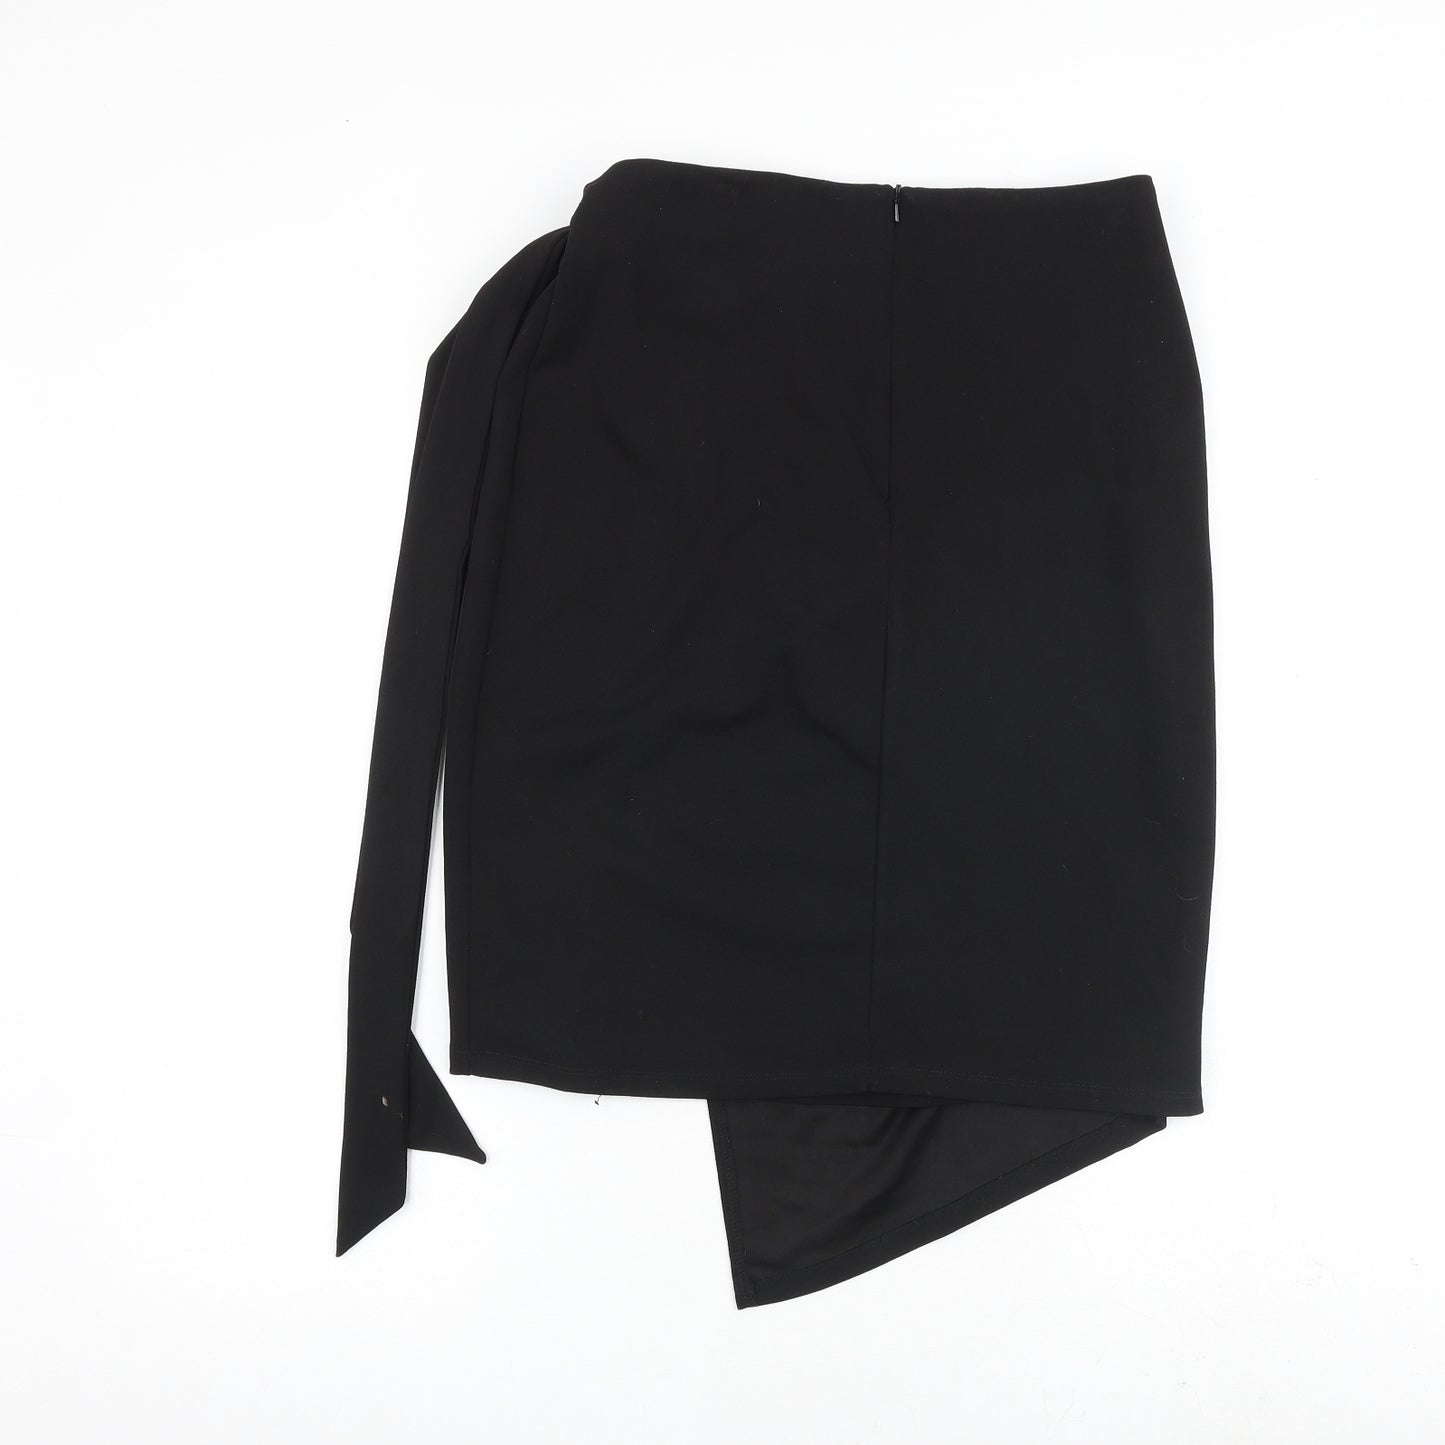 Faith & Joy Womens Black Polyester A-Line Skirt Size XS Zip